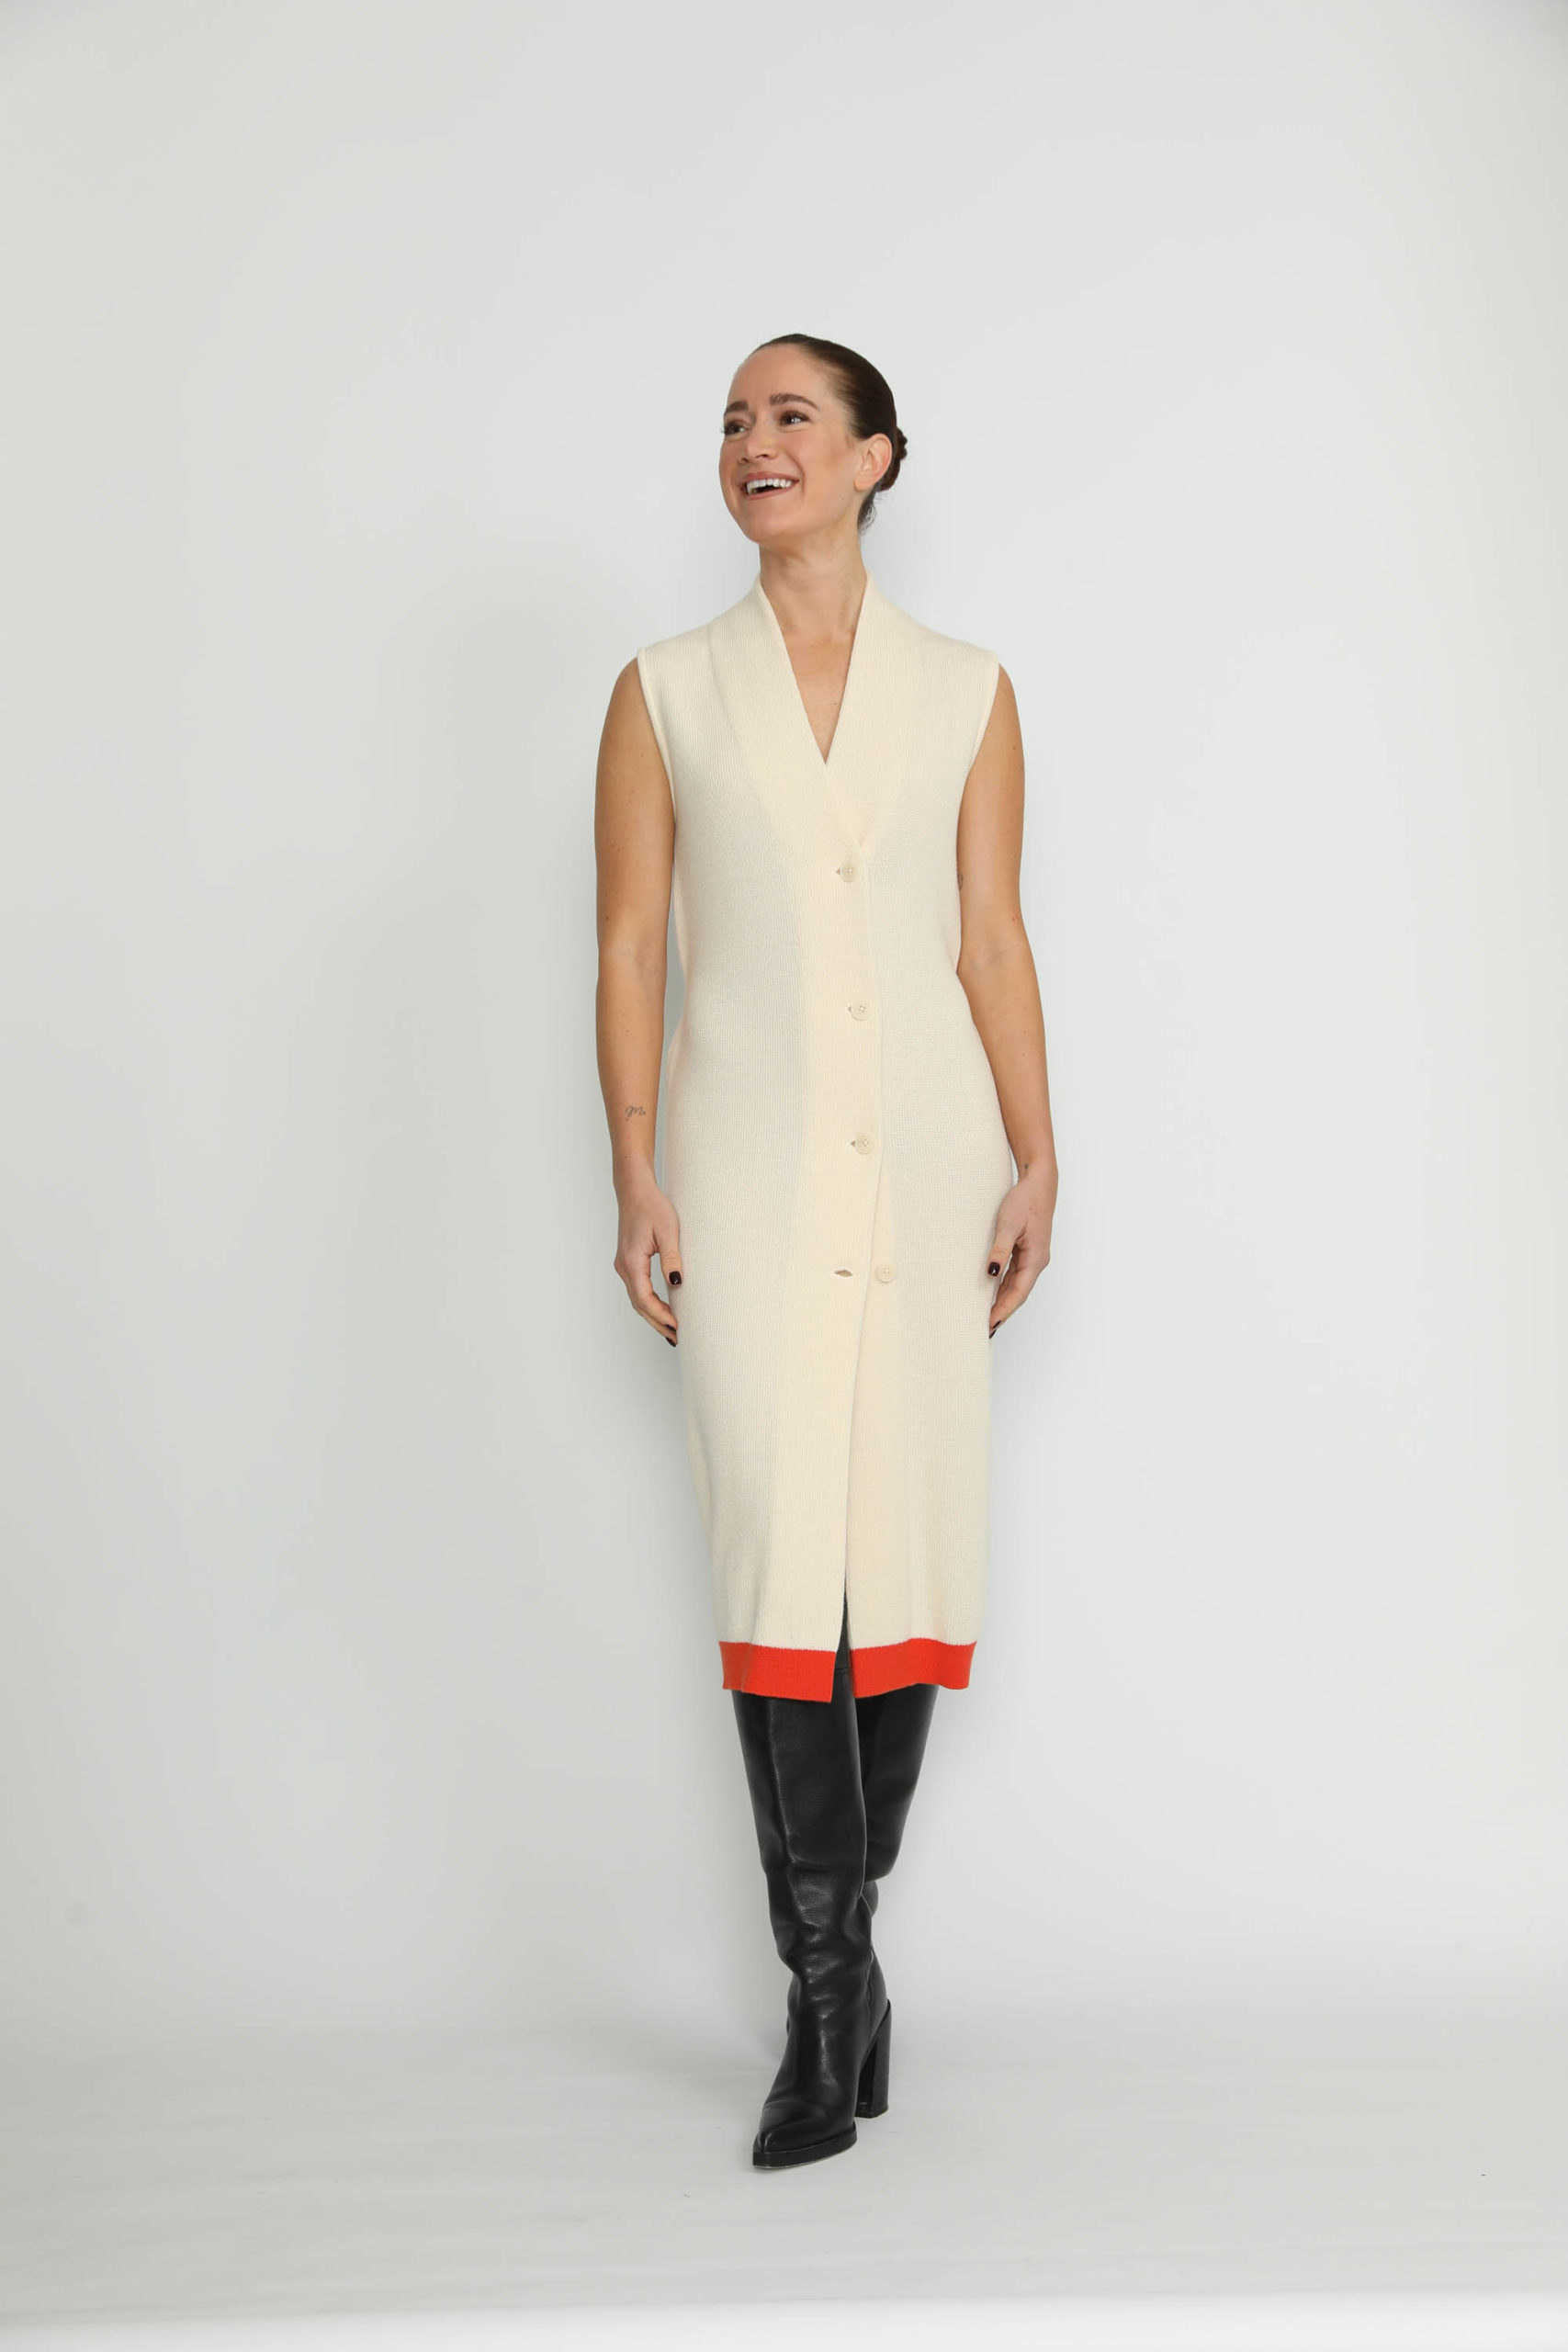 Arlesheim Dress – Arlesheim White/Orange Knit Dress0